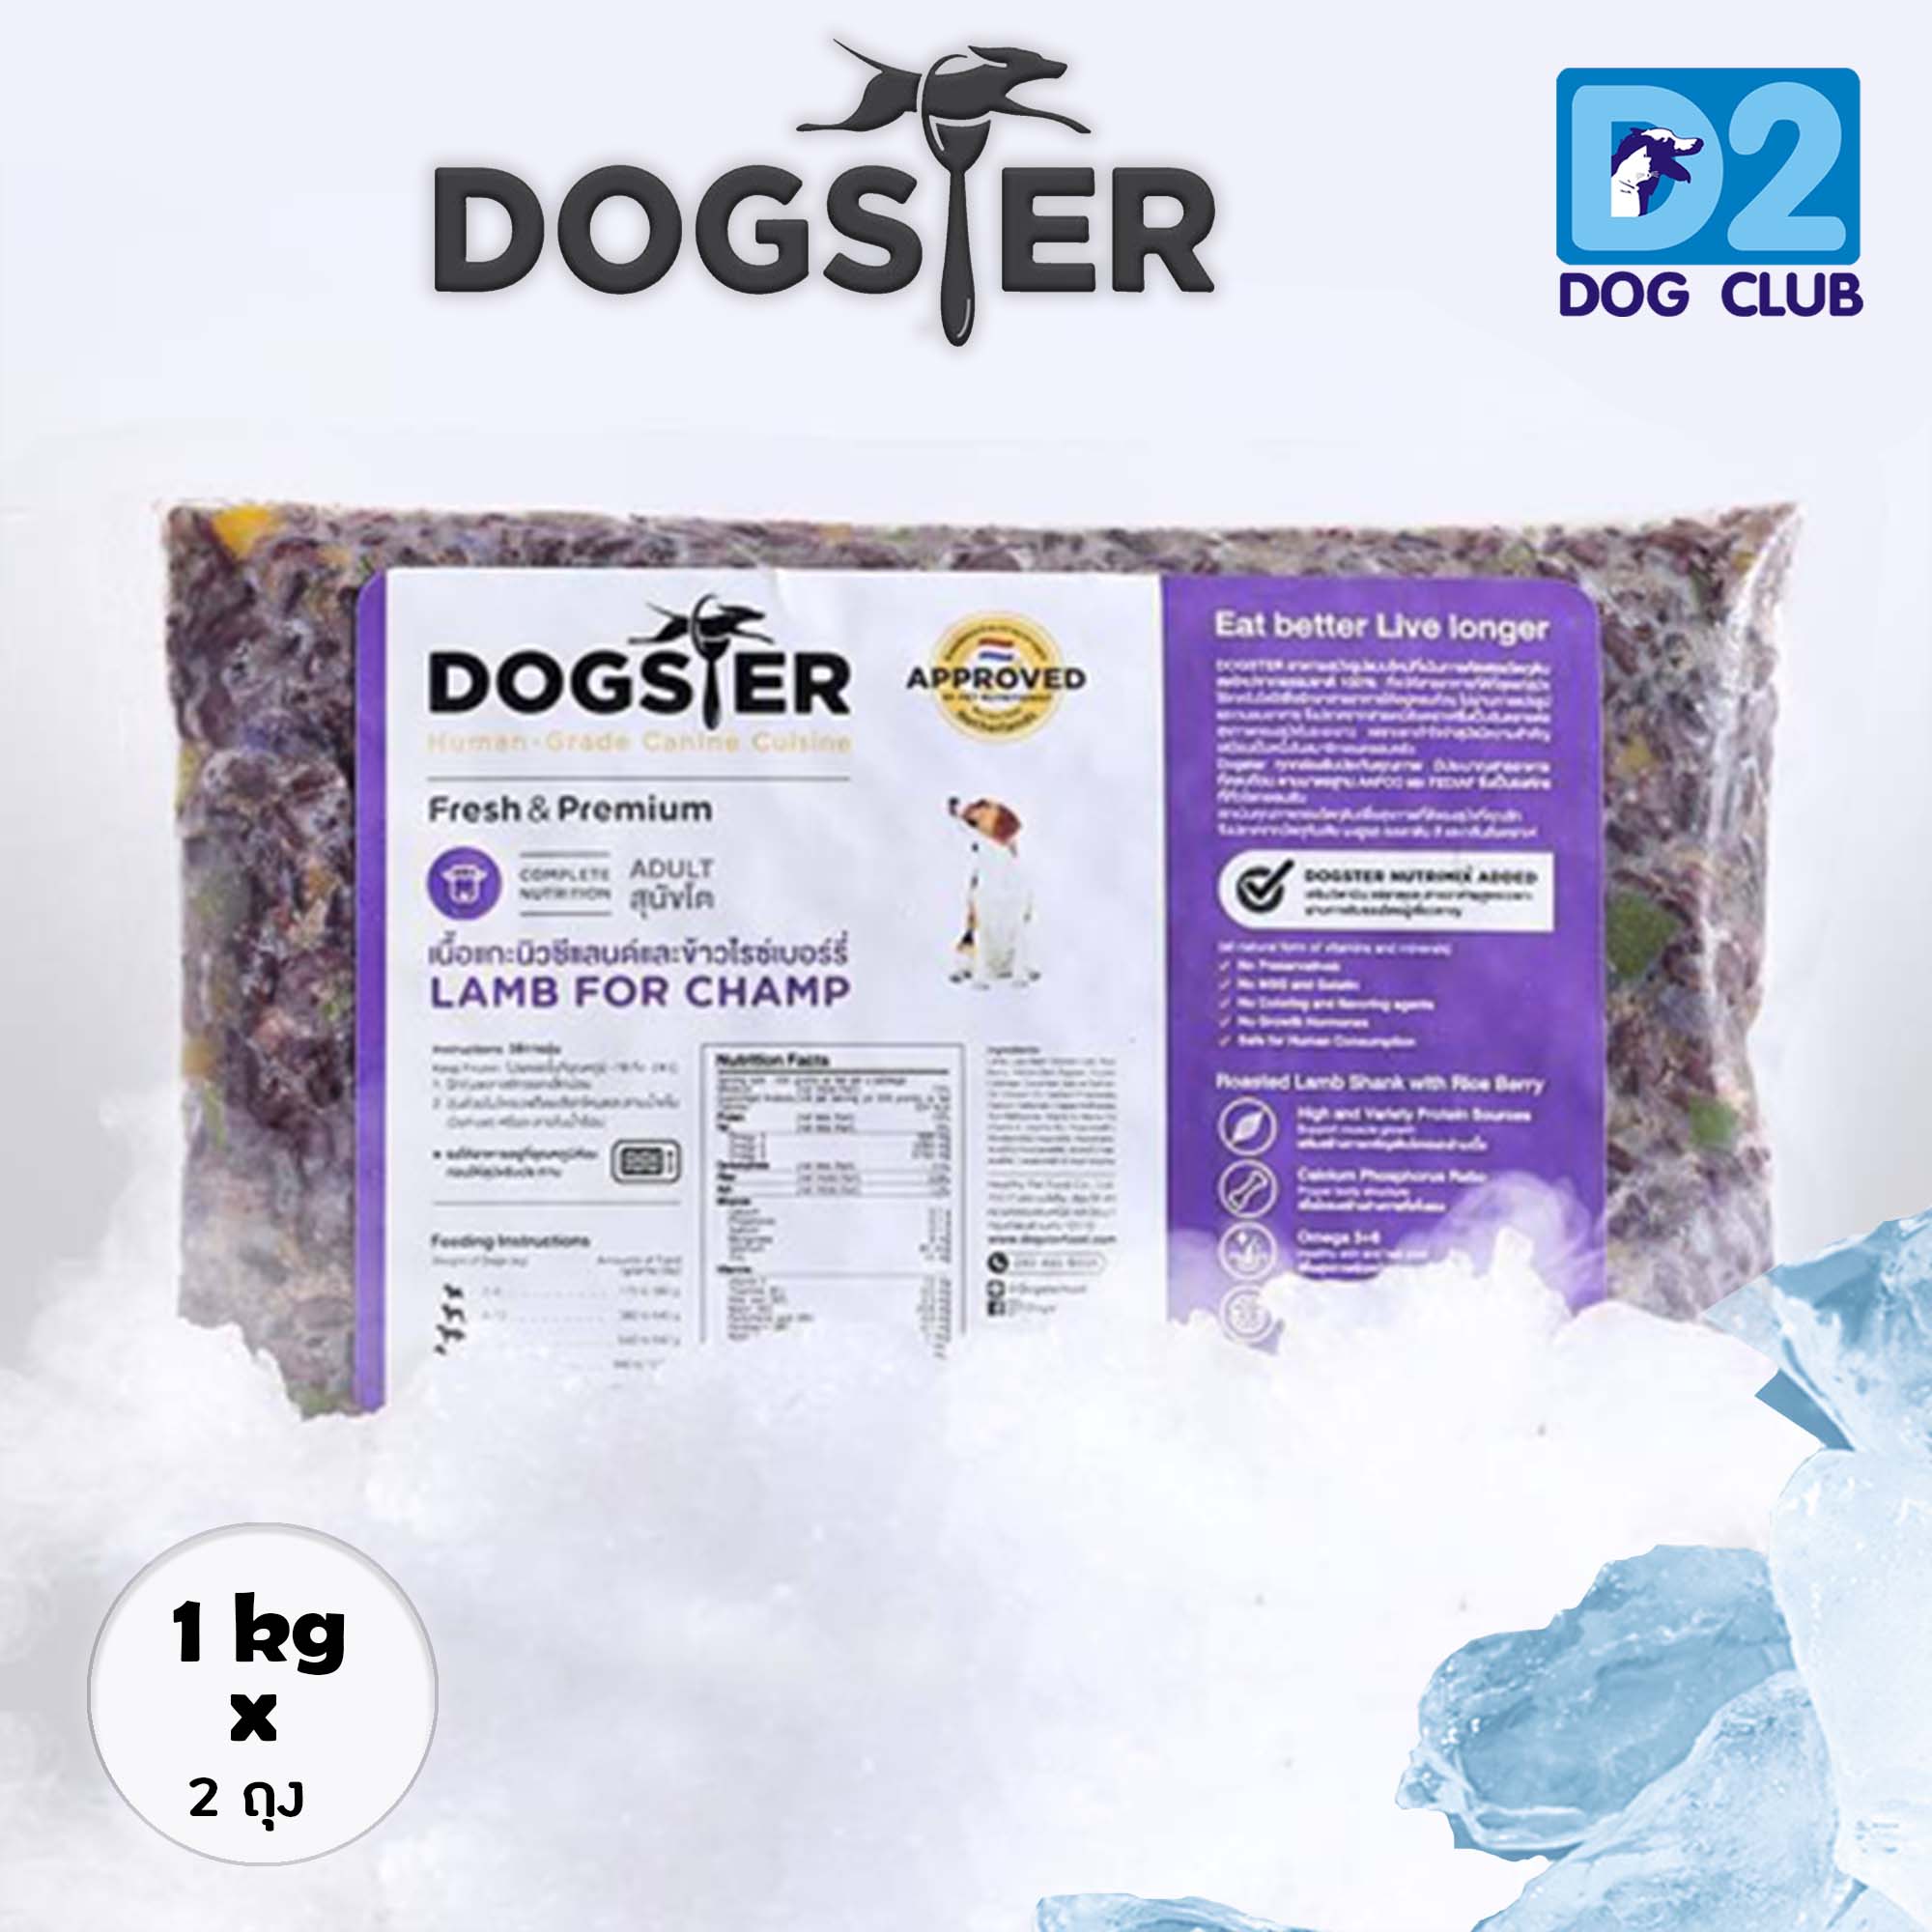 Dogster Dog Food Frozen Lamb For Champ อาหารสุนัข อาหารสุนัข แช่แข็ง เนื้อแกะและข้าวไรซ์เบอร์รี่ ขนาด 1kg x 2 ห่อ